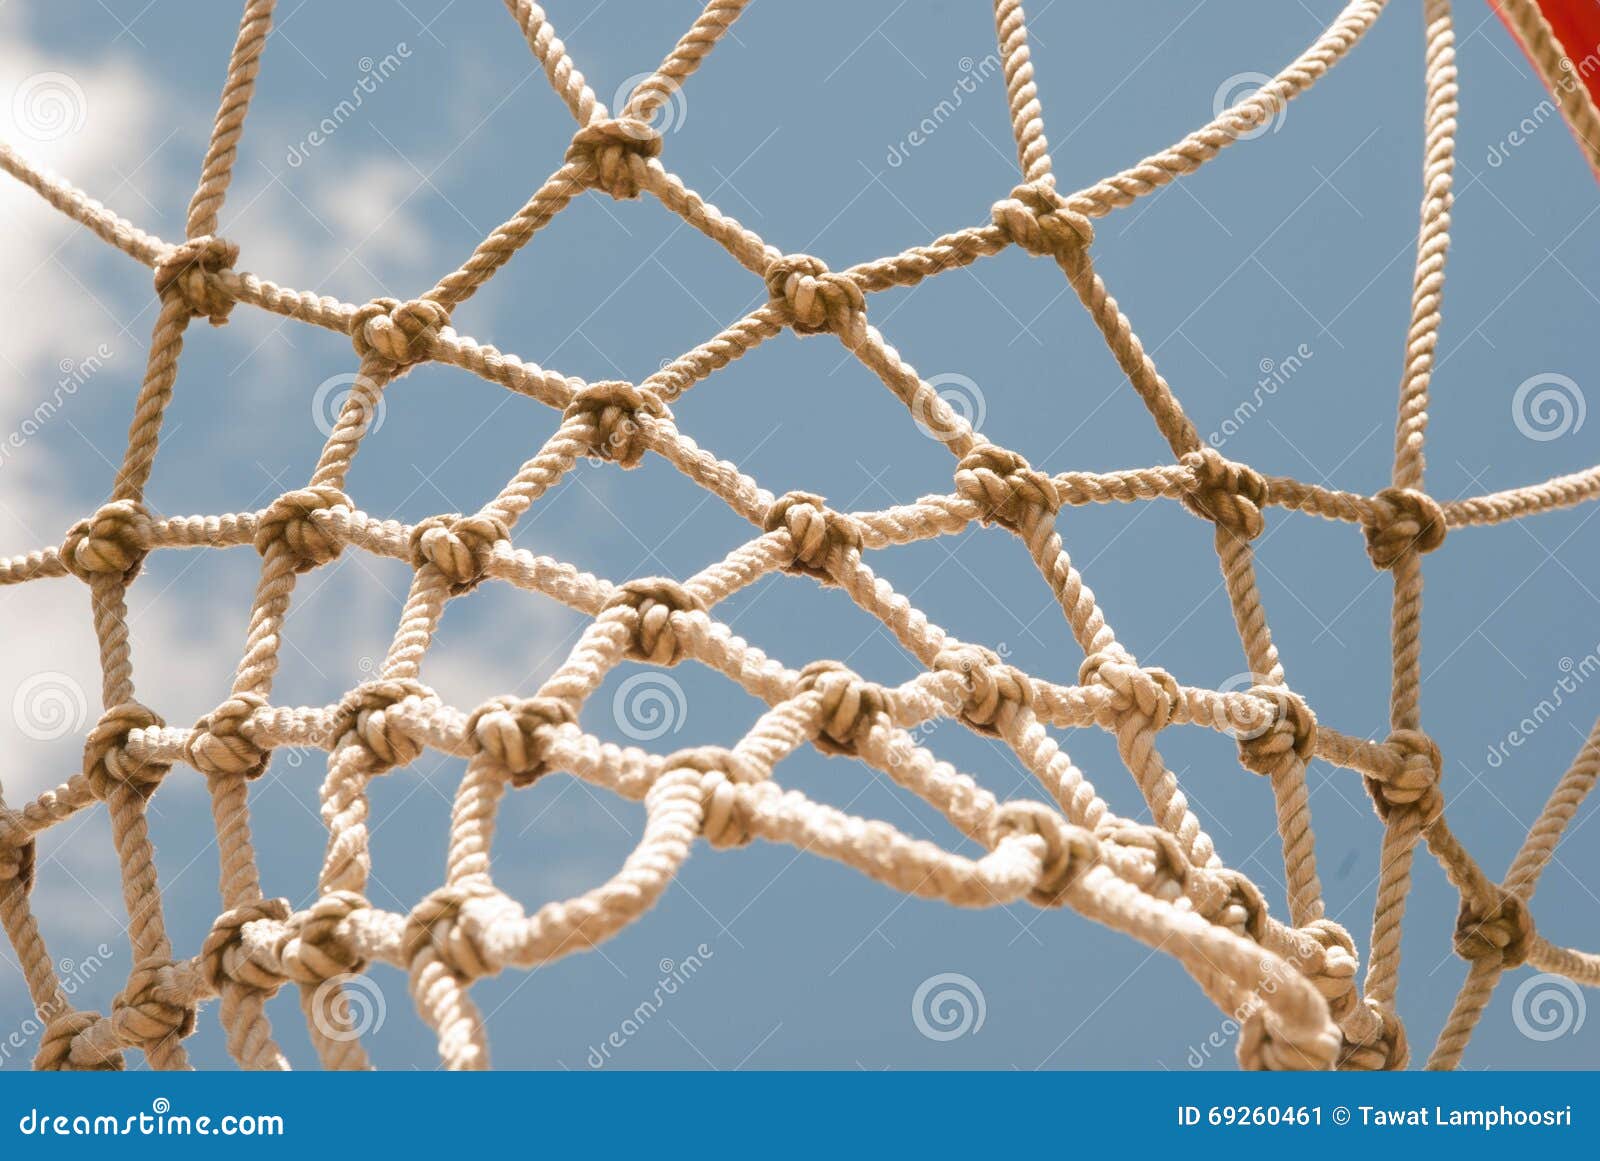 Netball net and hoop stock image. Image of netting, colours - 69260461